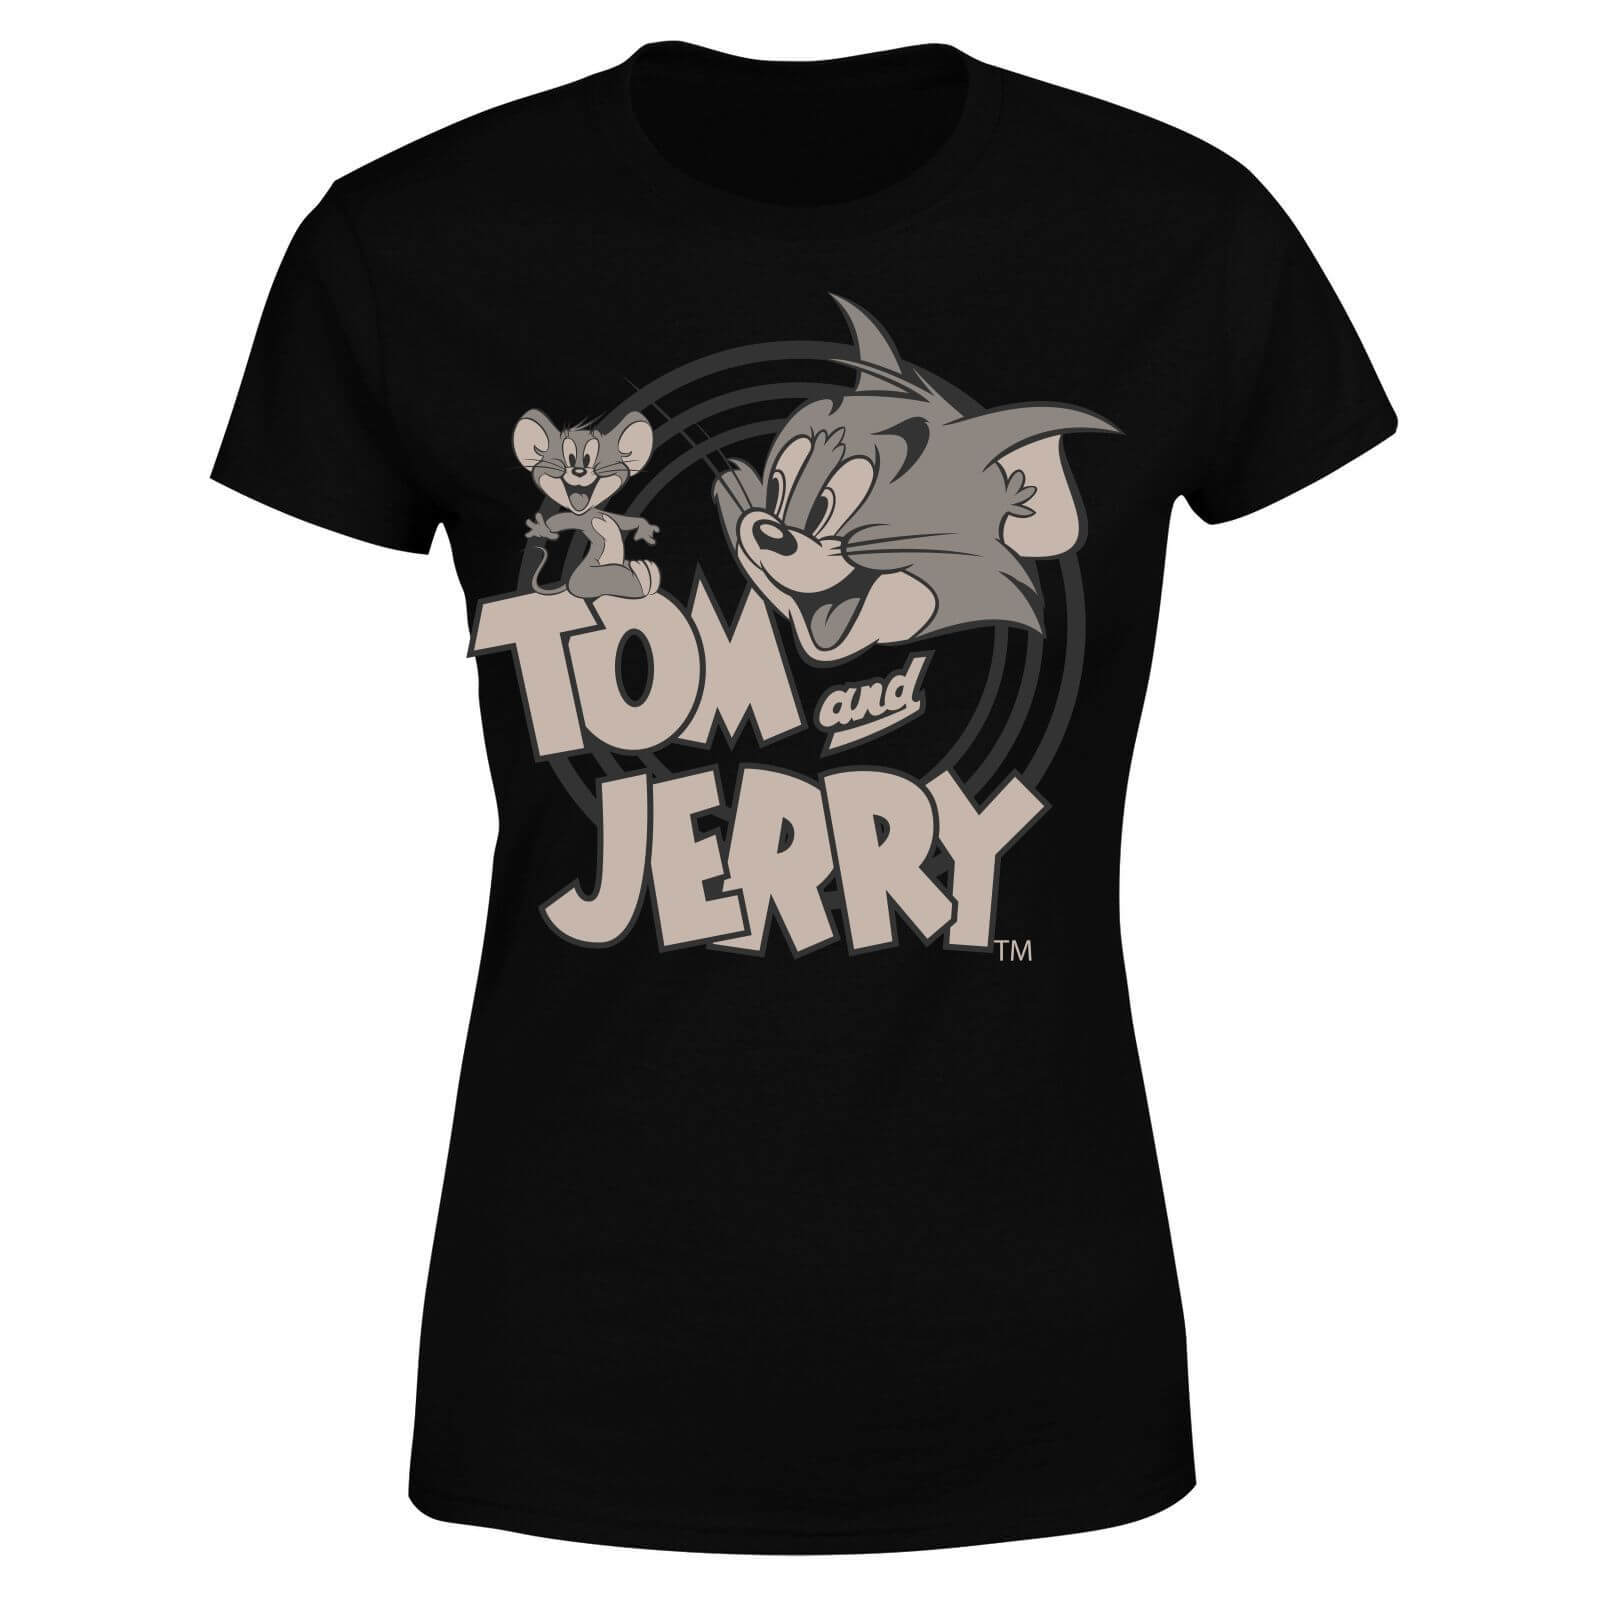 Tom & Jerry Circle Women's T-Shirt - Black - S